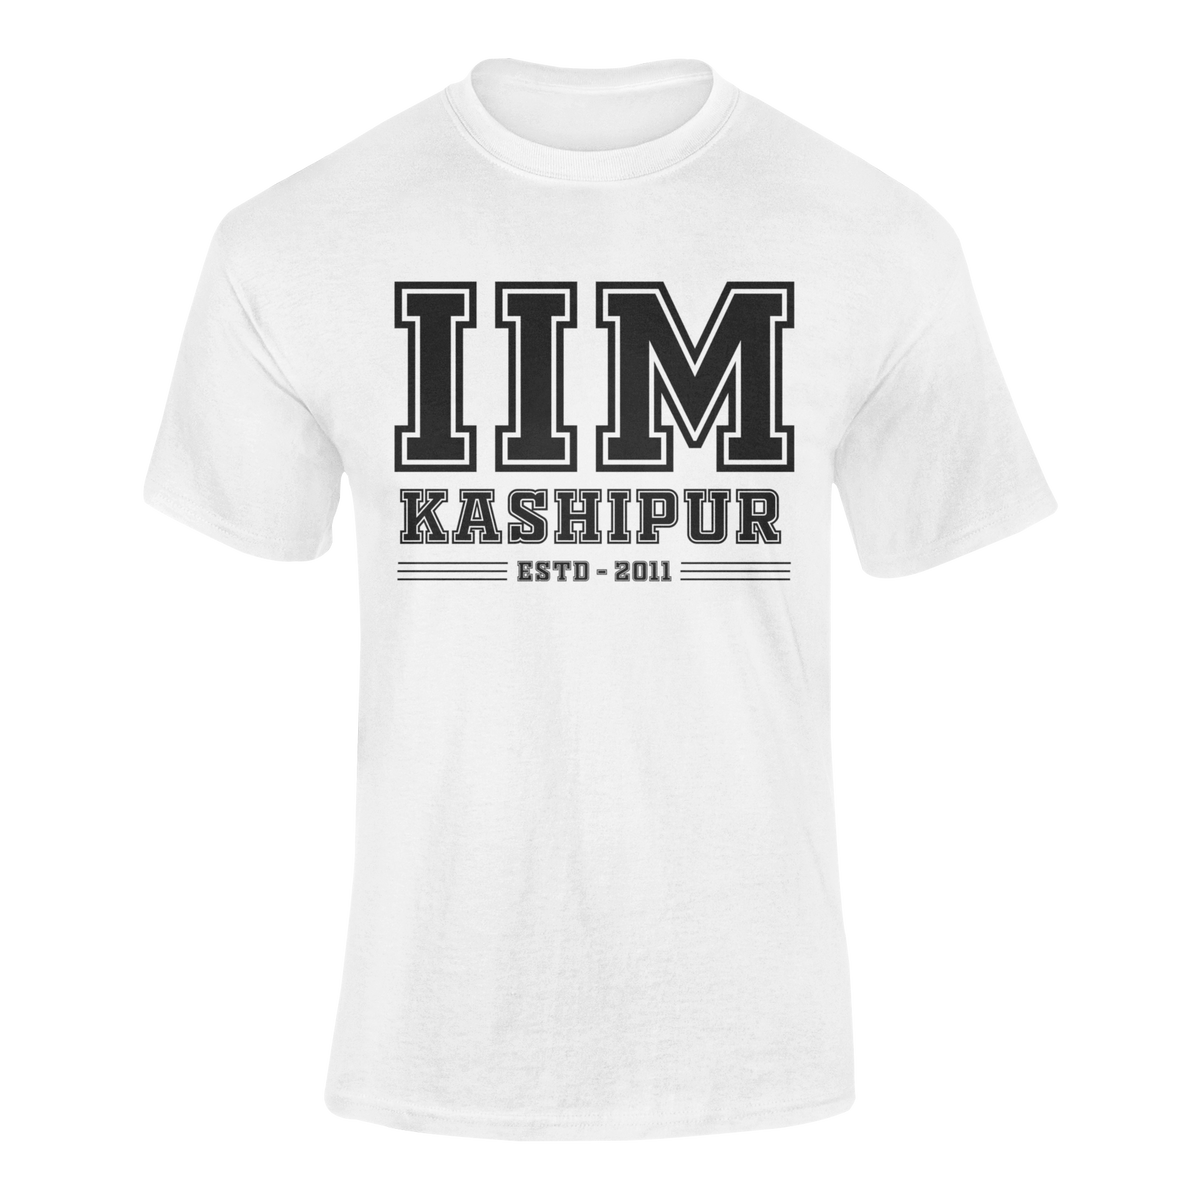 IIM KASHIPUR - teeshood.com